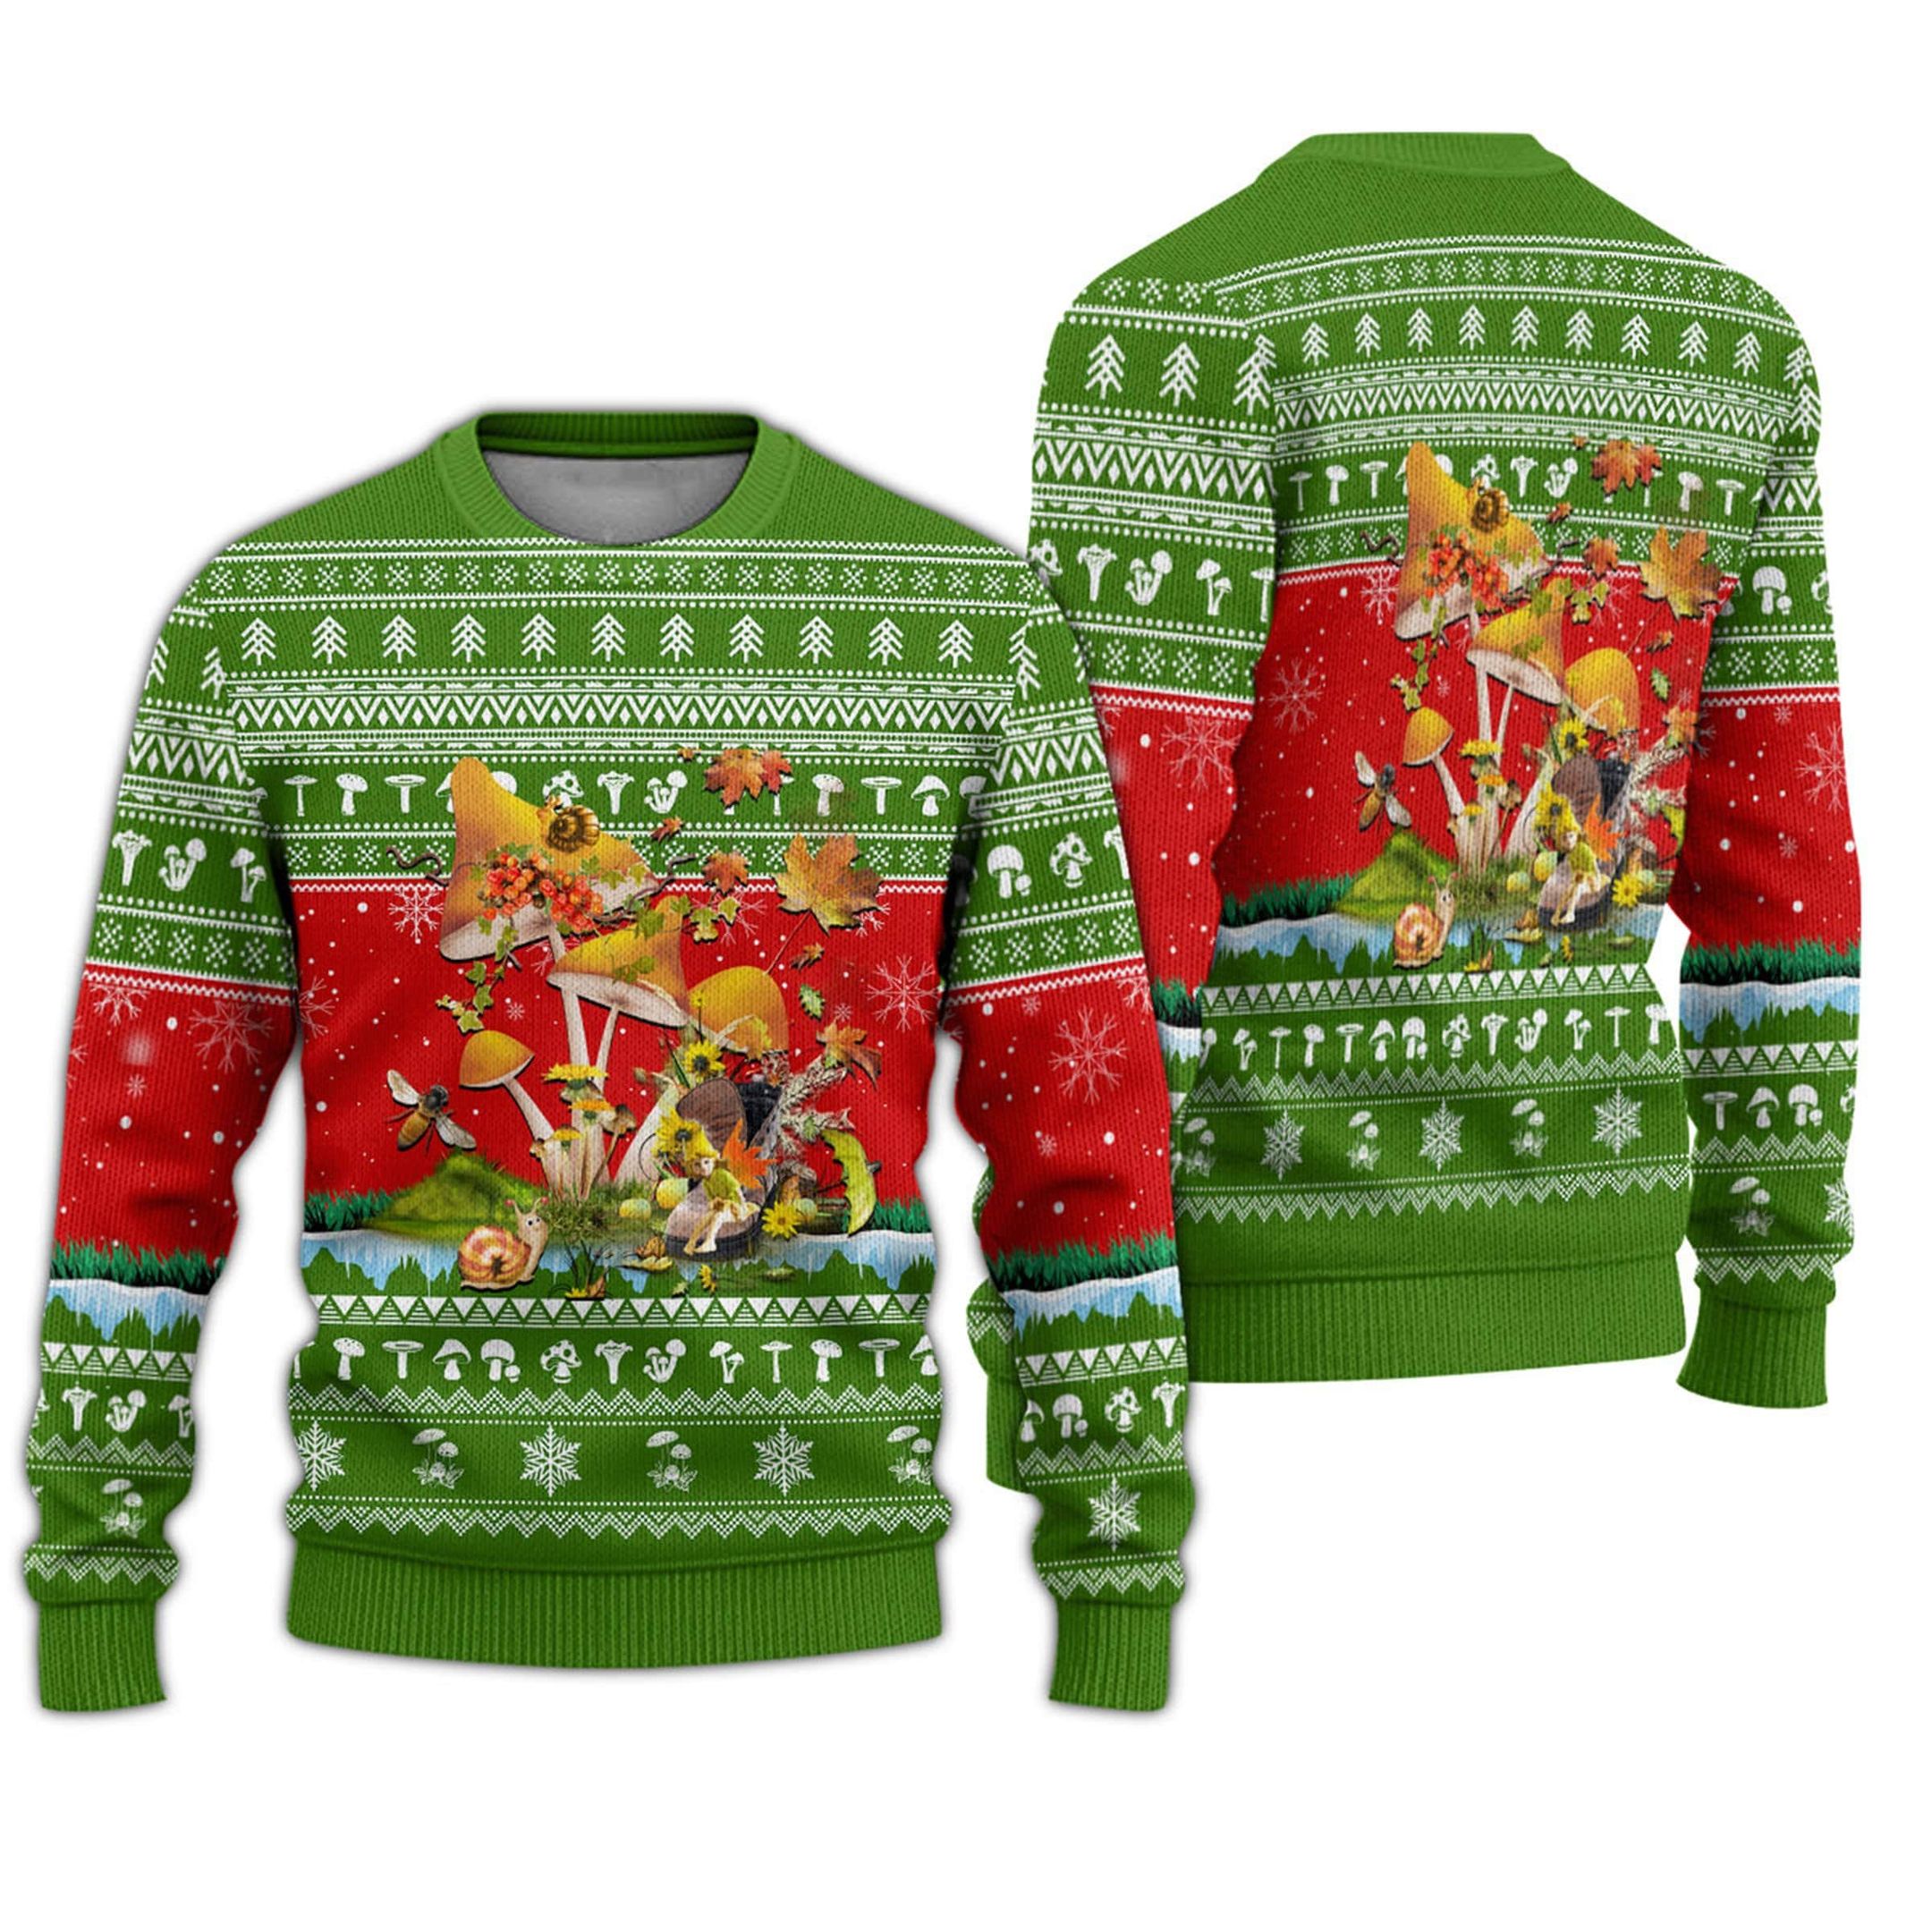 Amazing Mushroom Ugly Christmas Sweater